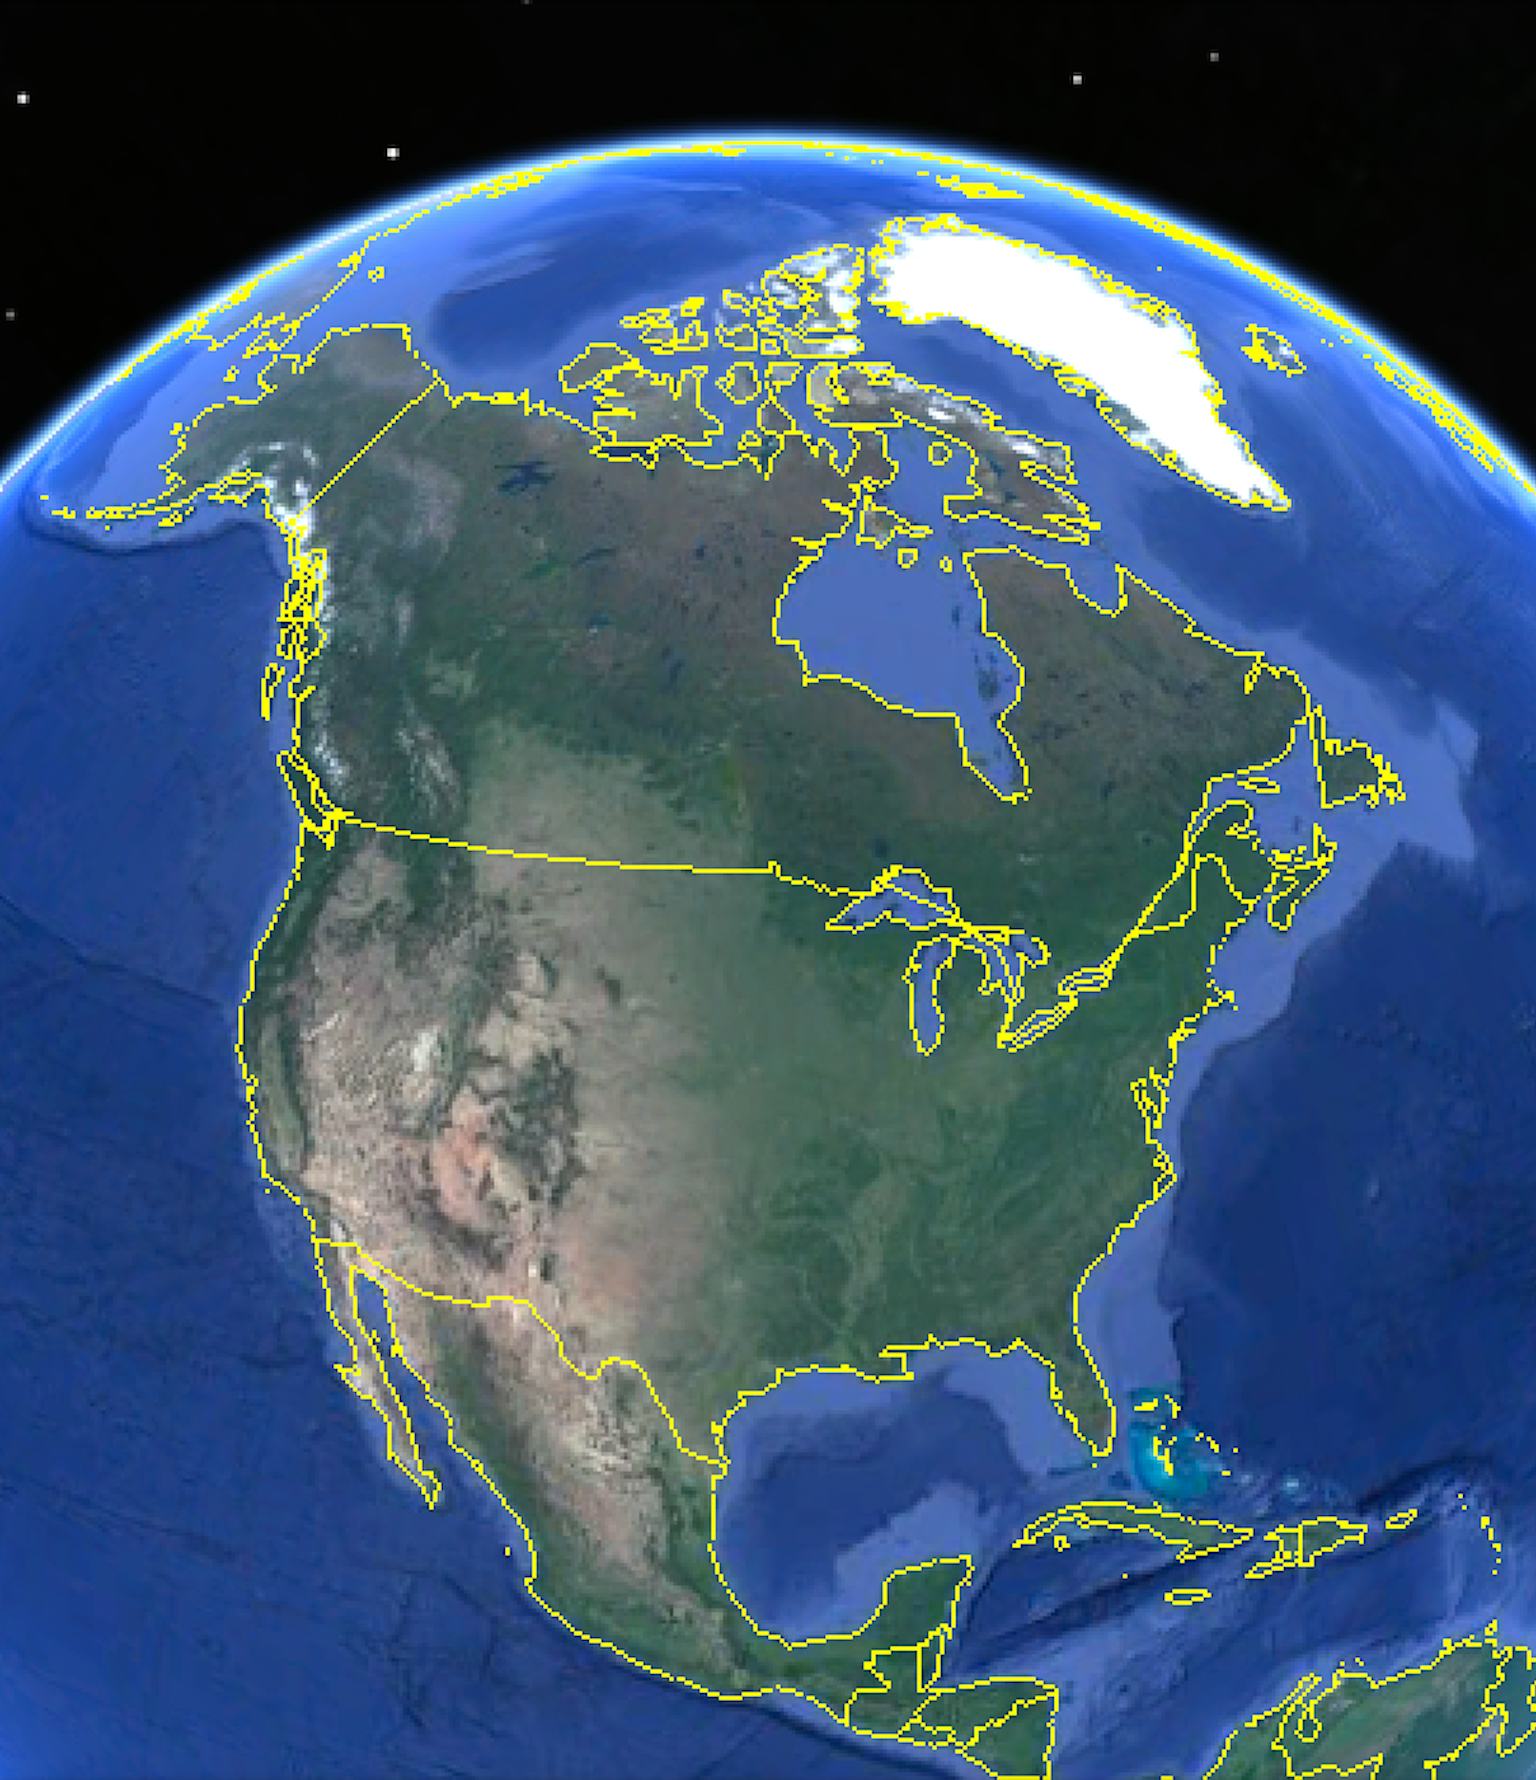 Maps Google Earth - Image to u